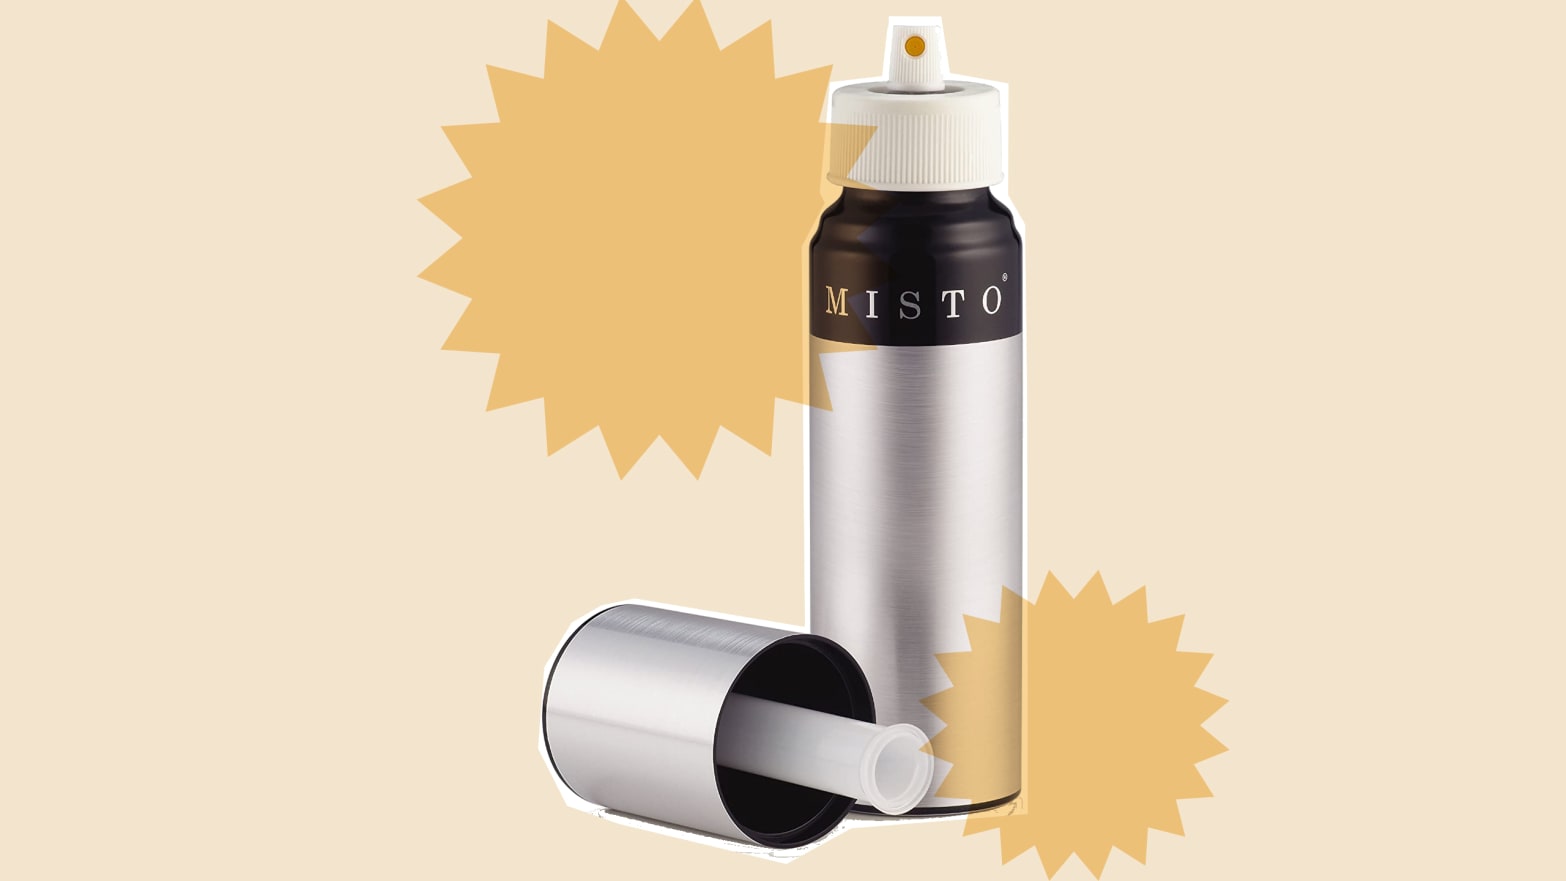 Misto Olive Oil Sprayer Brushed Aluminum : Target